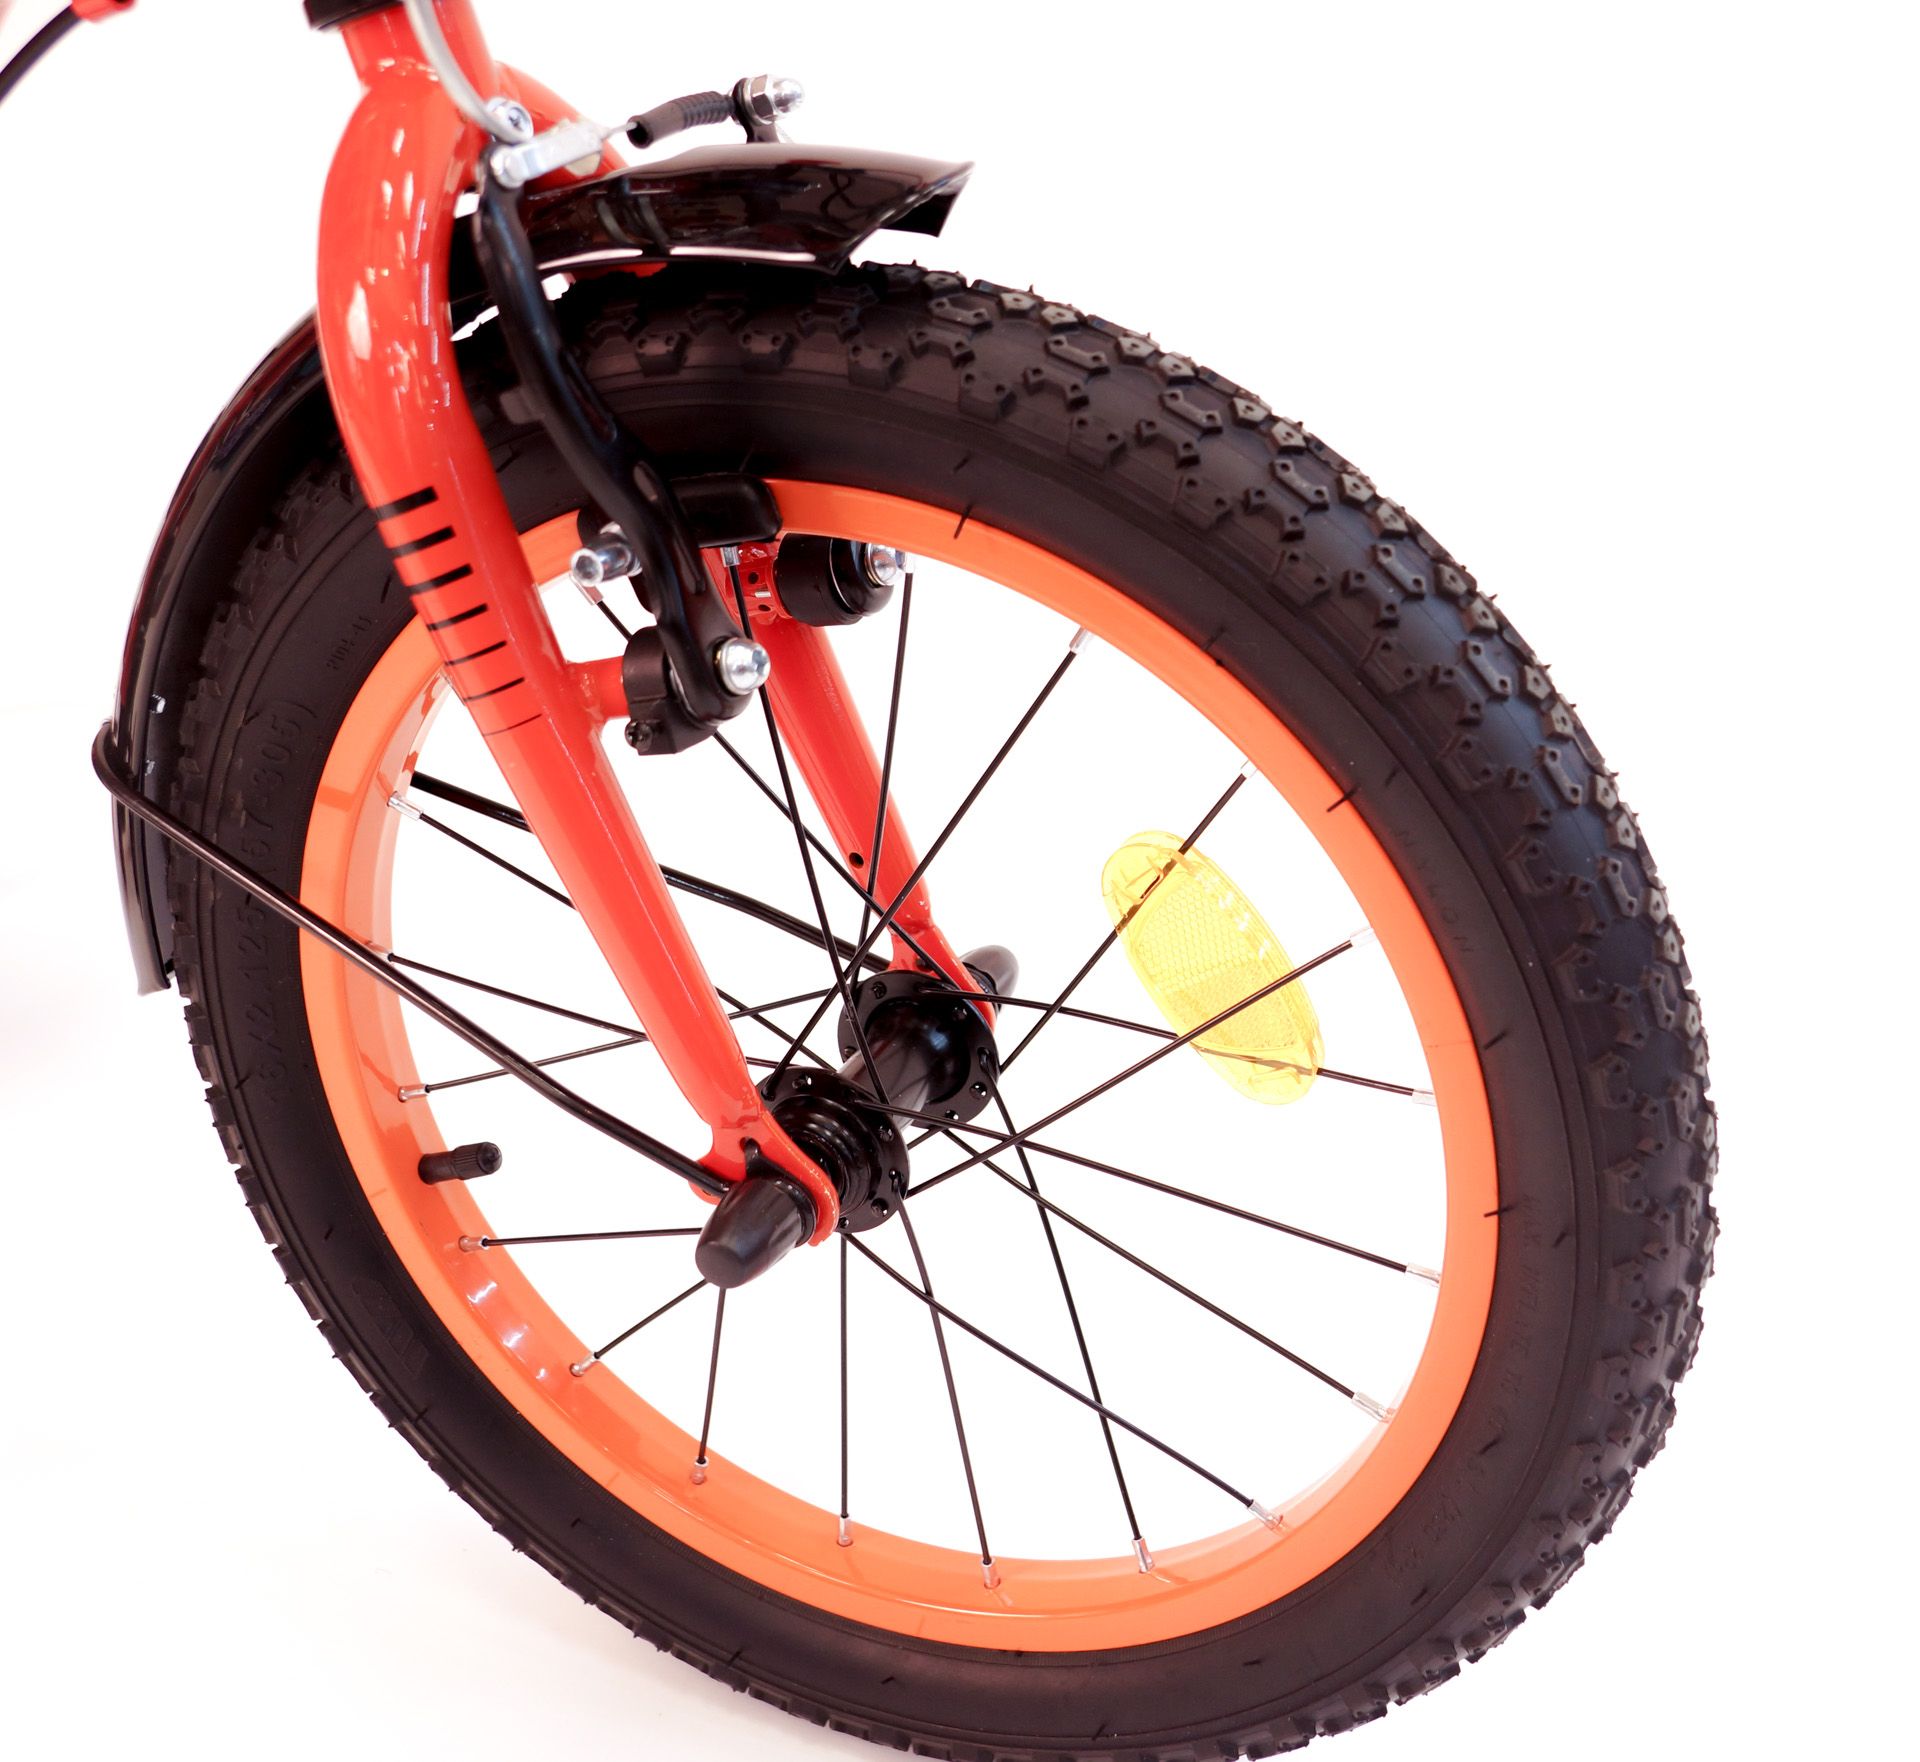 Велосипед детский LAUX GROW UP 16 BOYS, orange/black